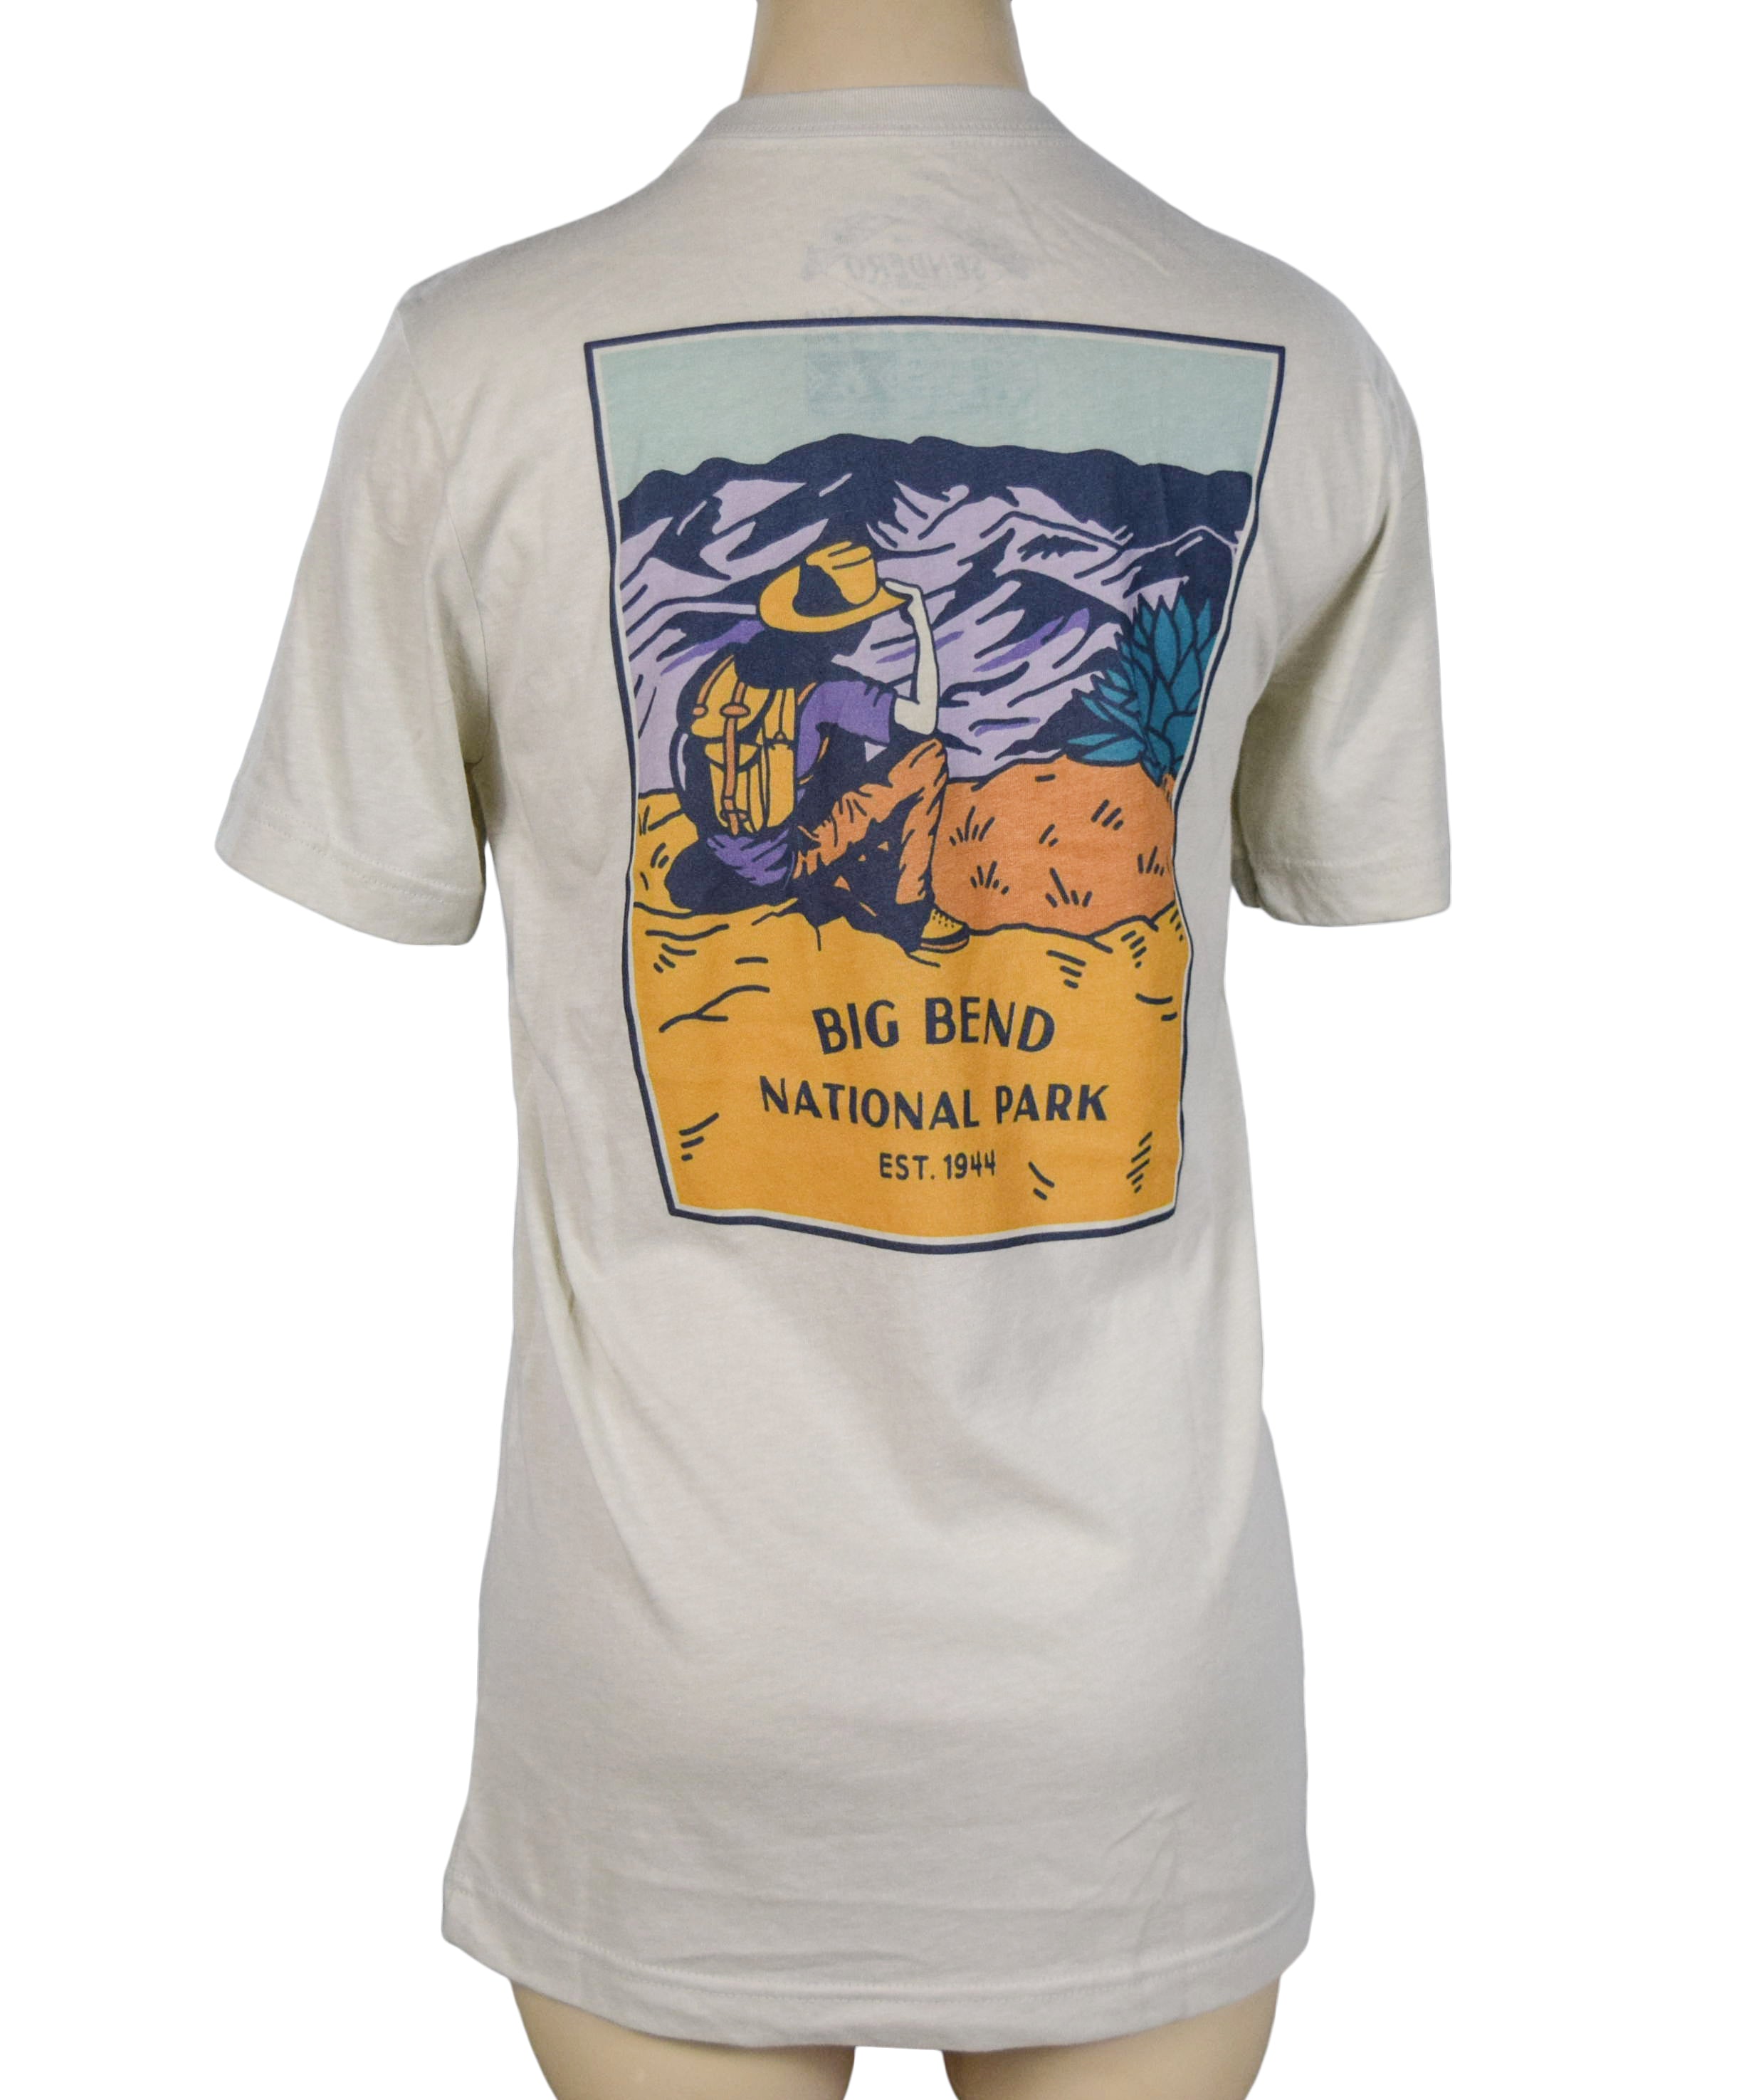 Sendero Provisions Co. Big Bend National Park "Sand" T-Shirt (S)